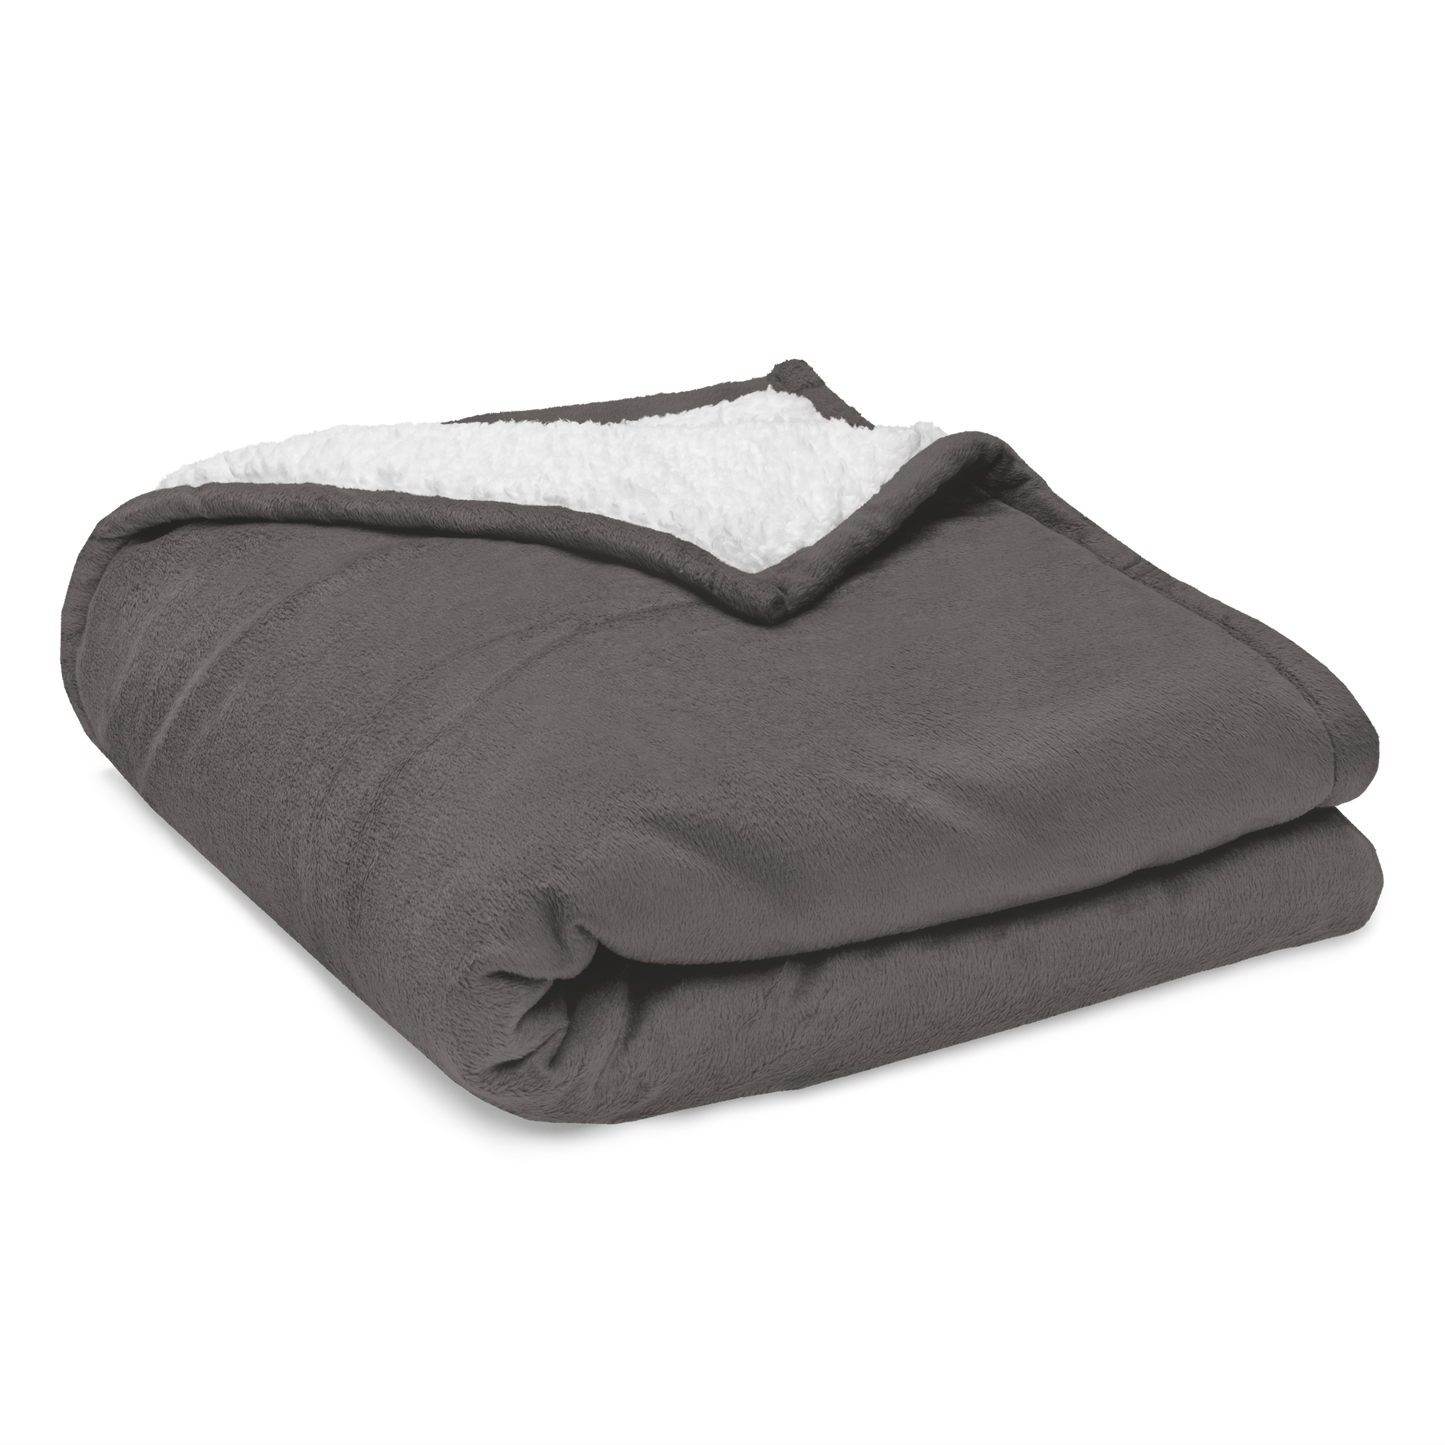 JLL Premium sherpa blanket